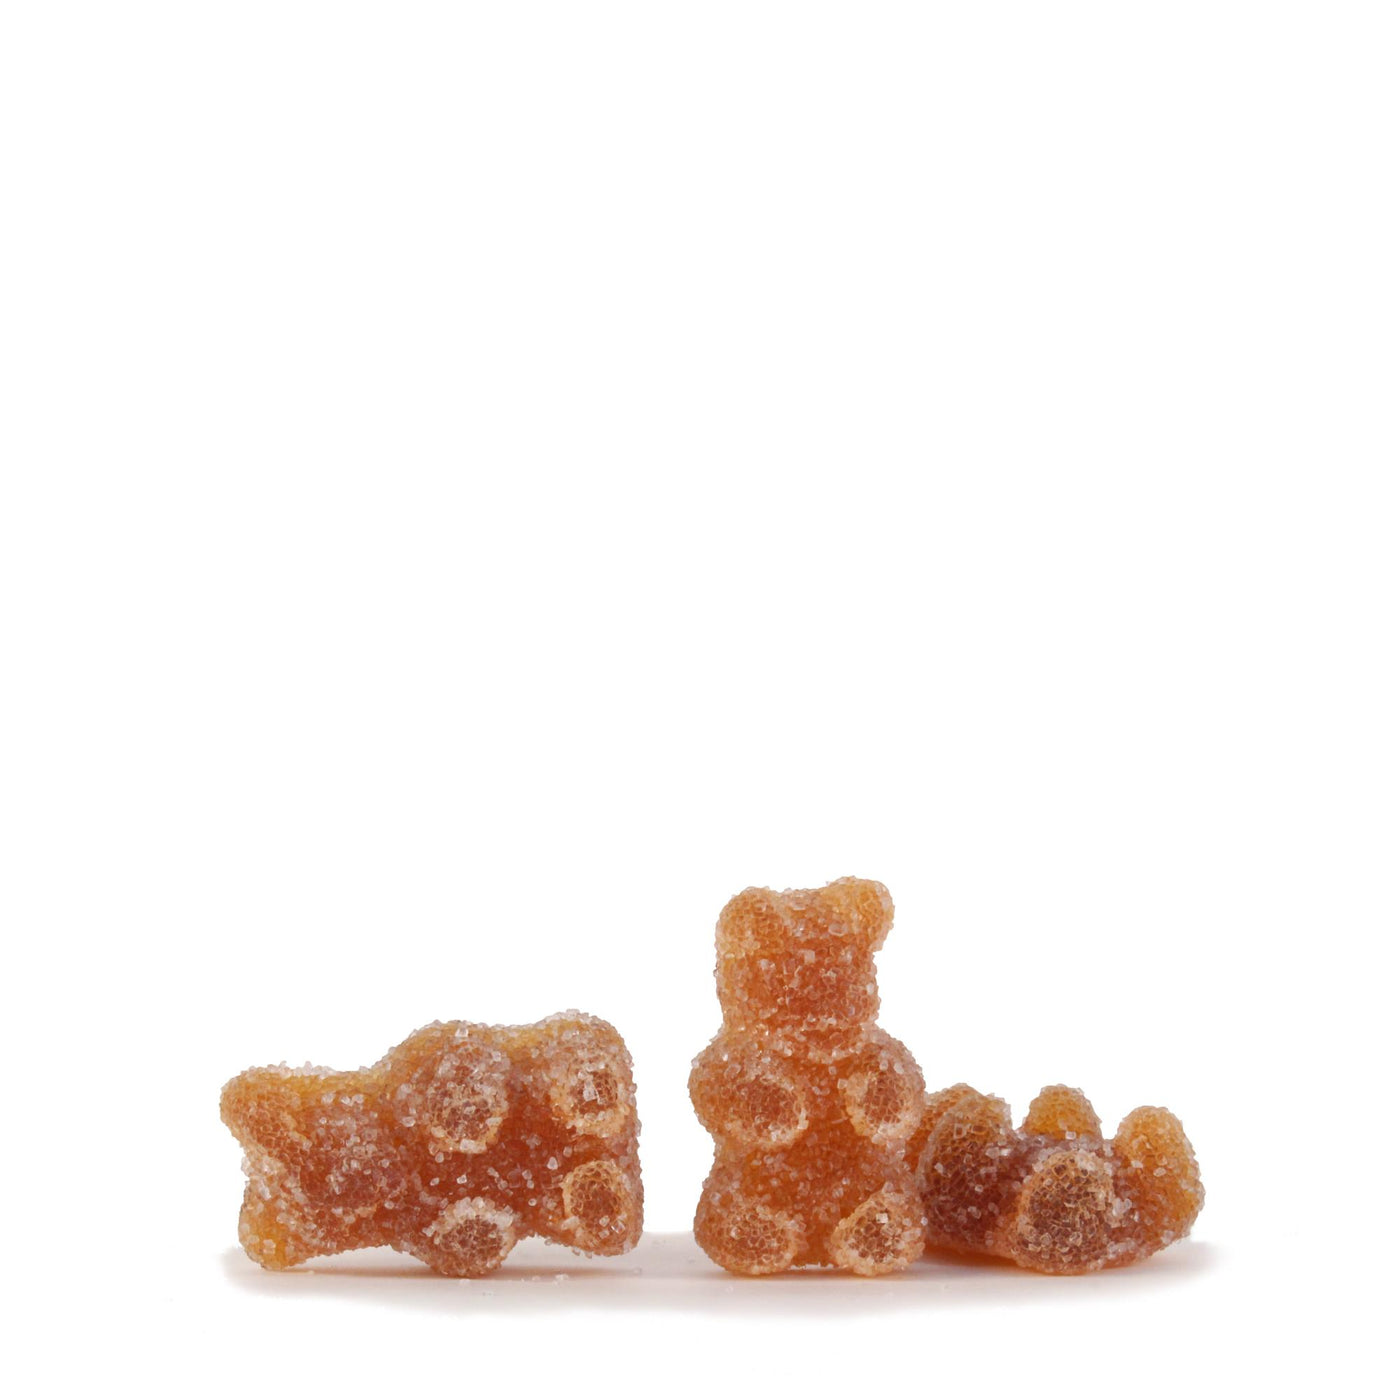 Joris Colabeertjes – Soft & Tangy Sugar Coated Cola Bears